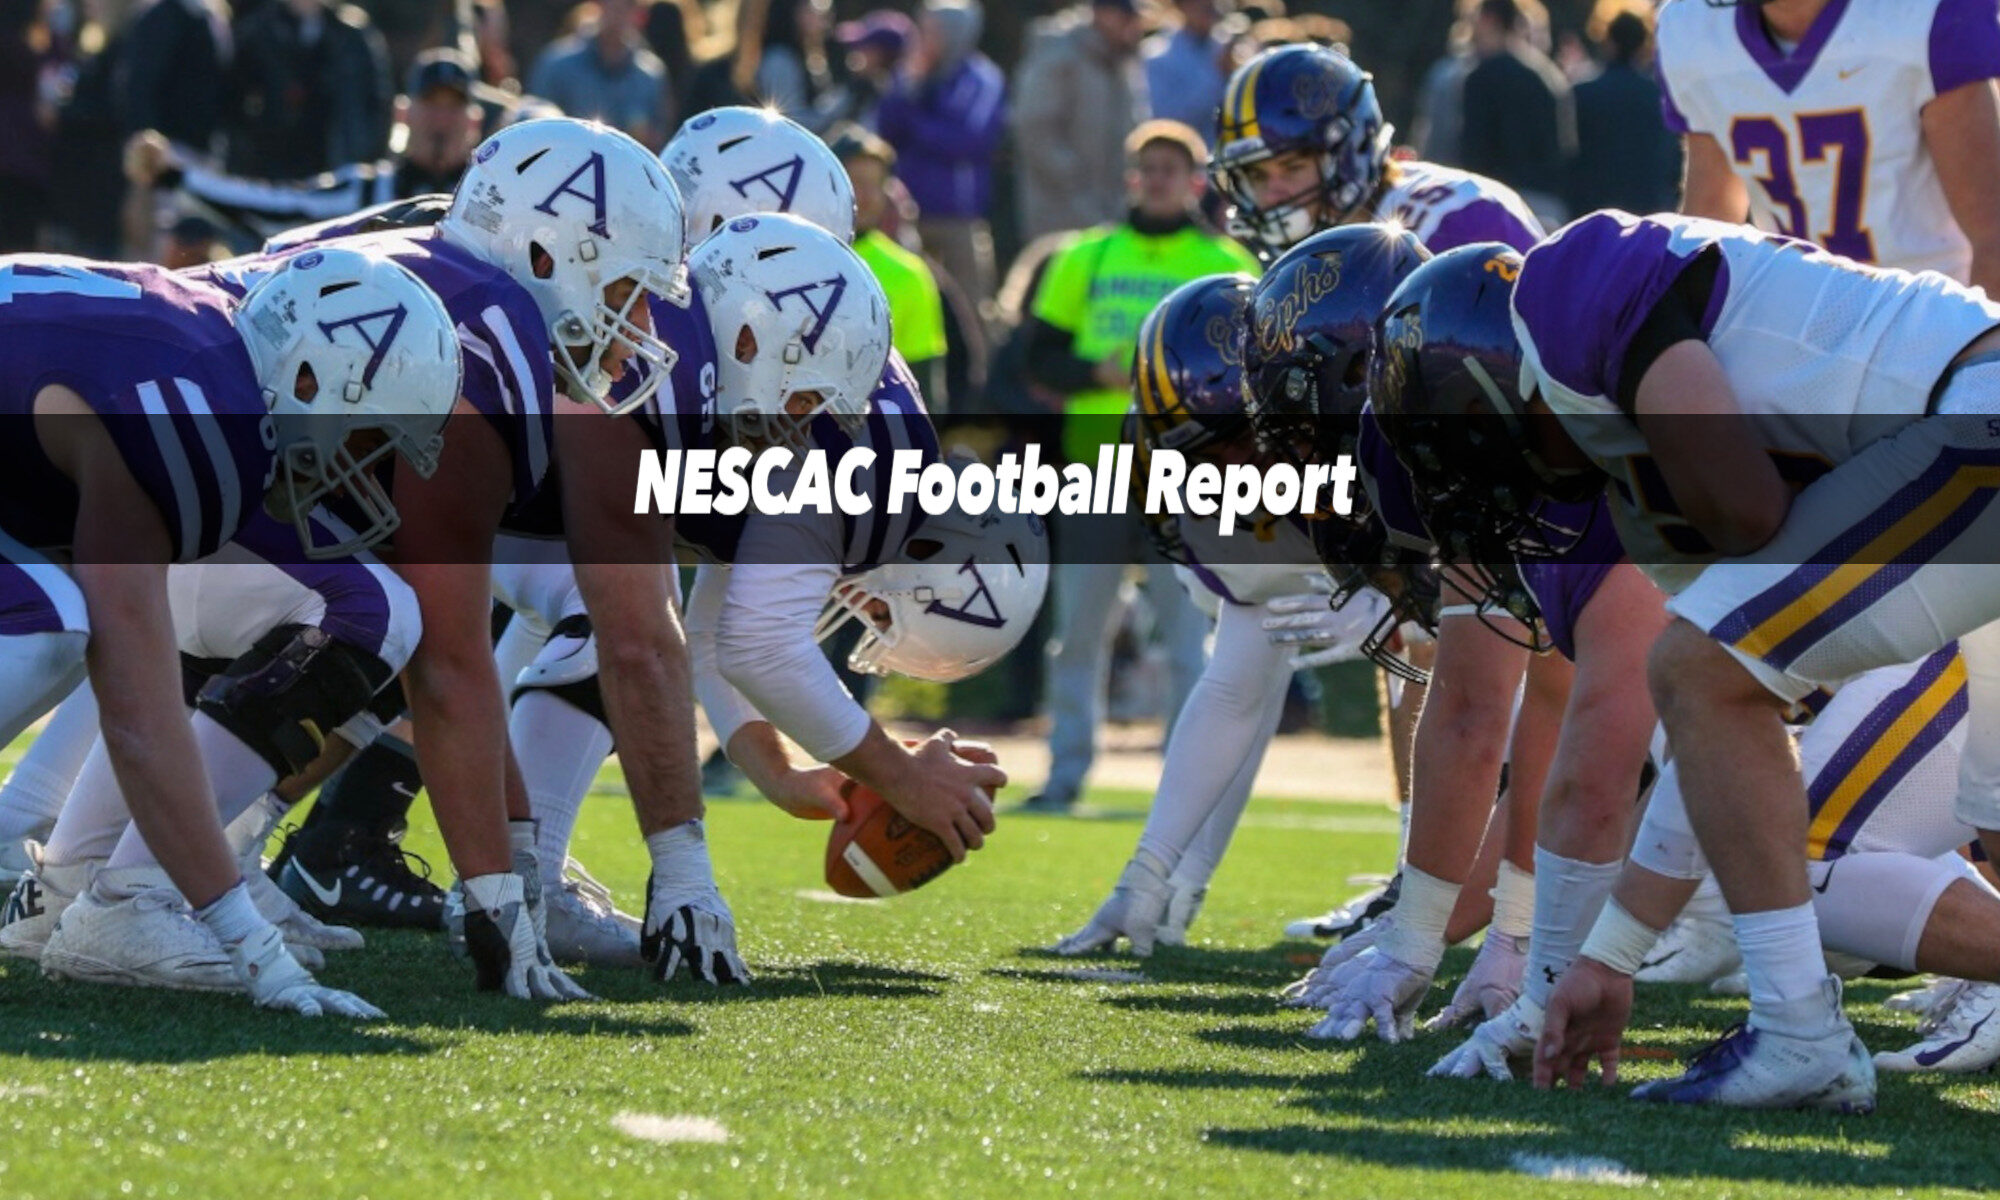 NESCAC FOOTBALL REPORT All things NESCAC Football